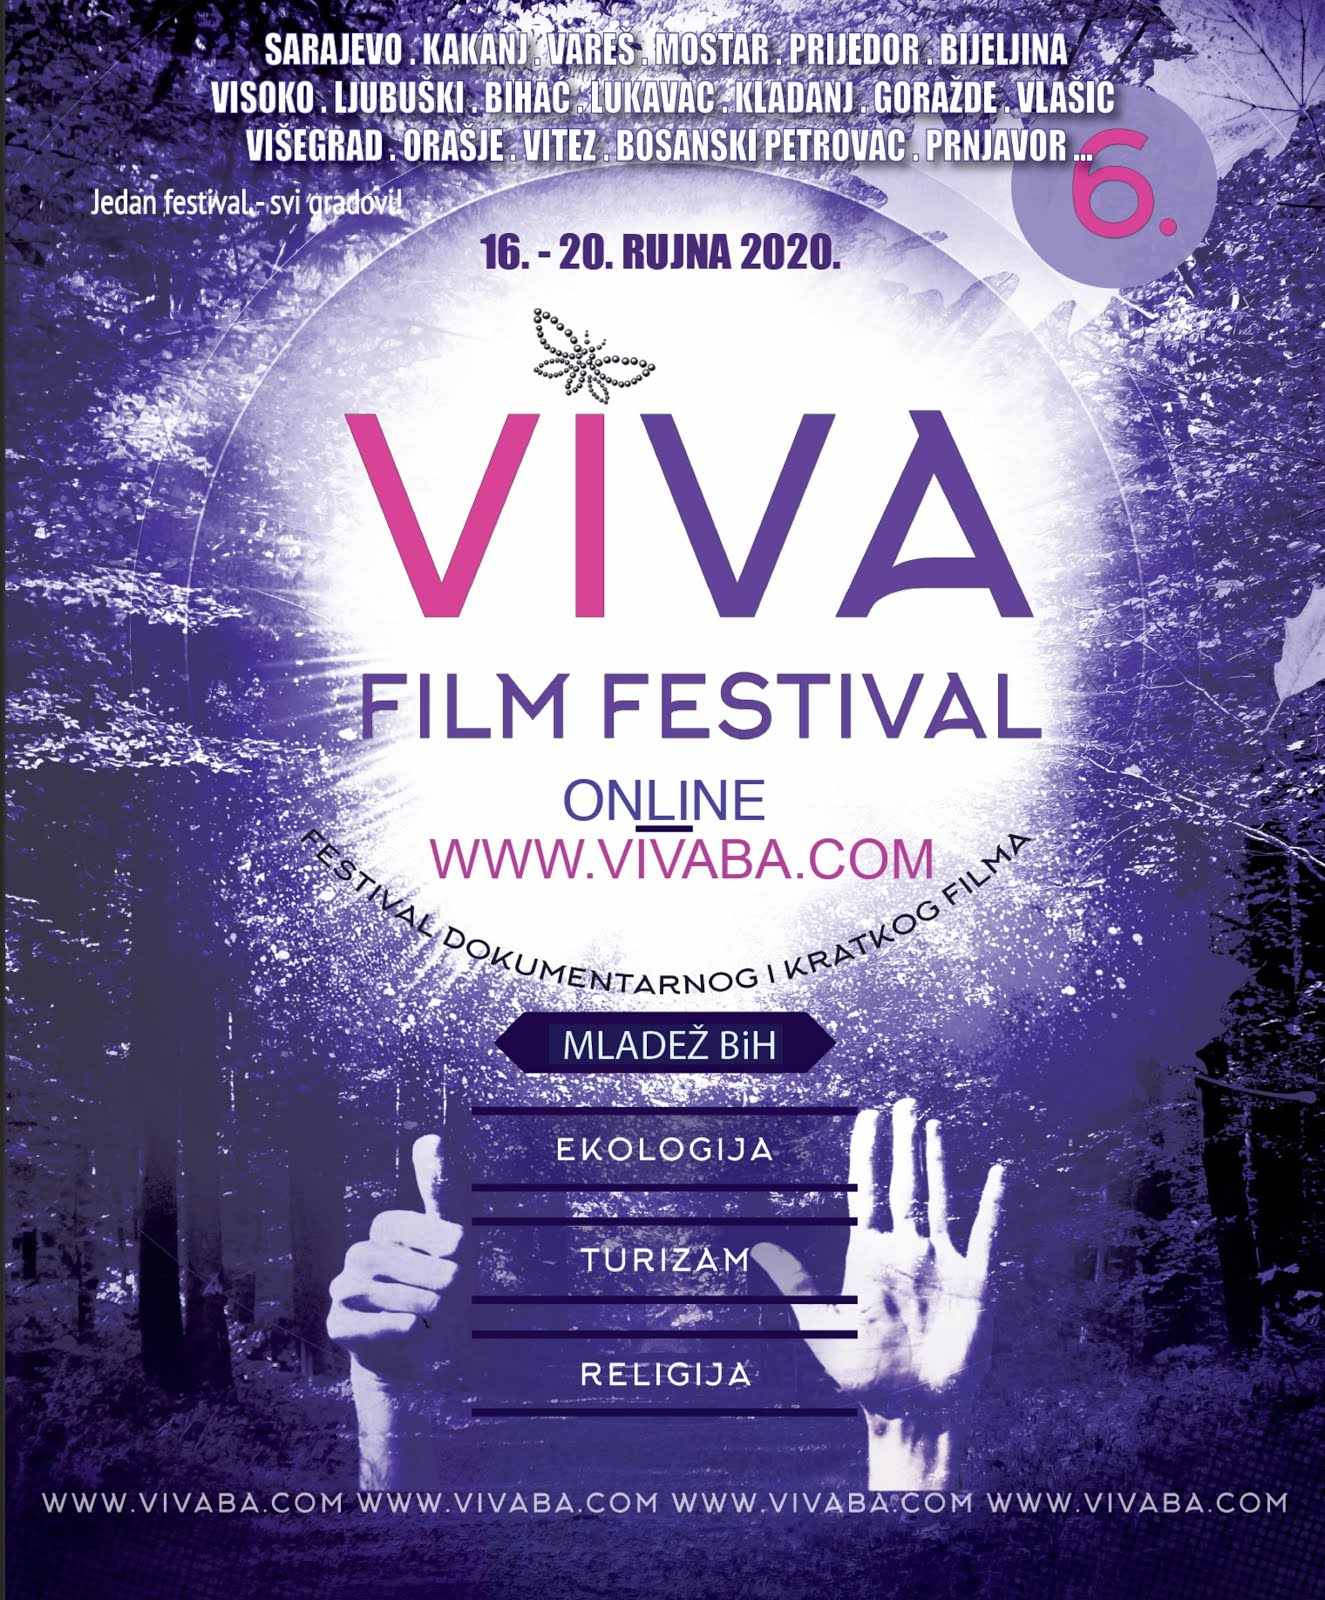 Šesti VIVA Film Festival bit će održan od 16. do 20. rujna